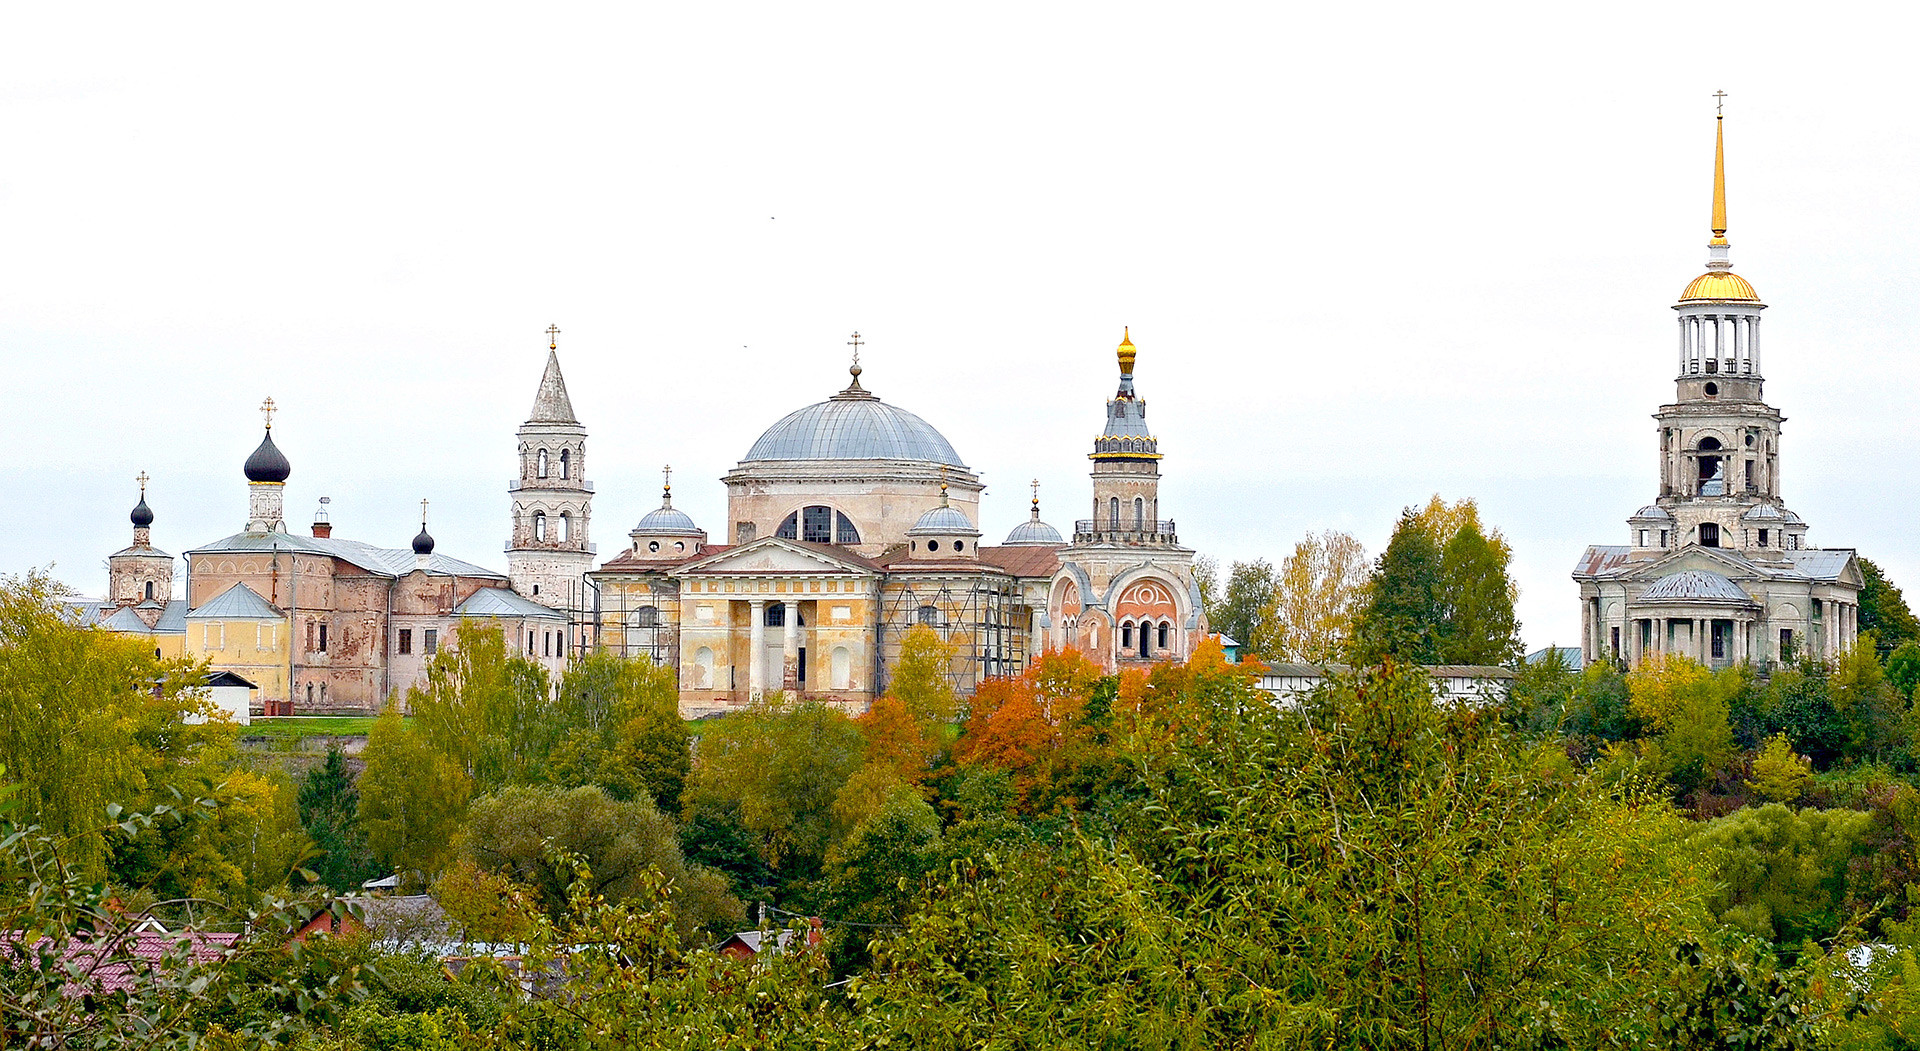 St. Boris and Gleb Monastery